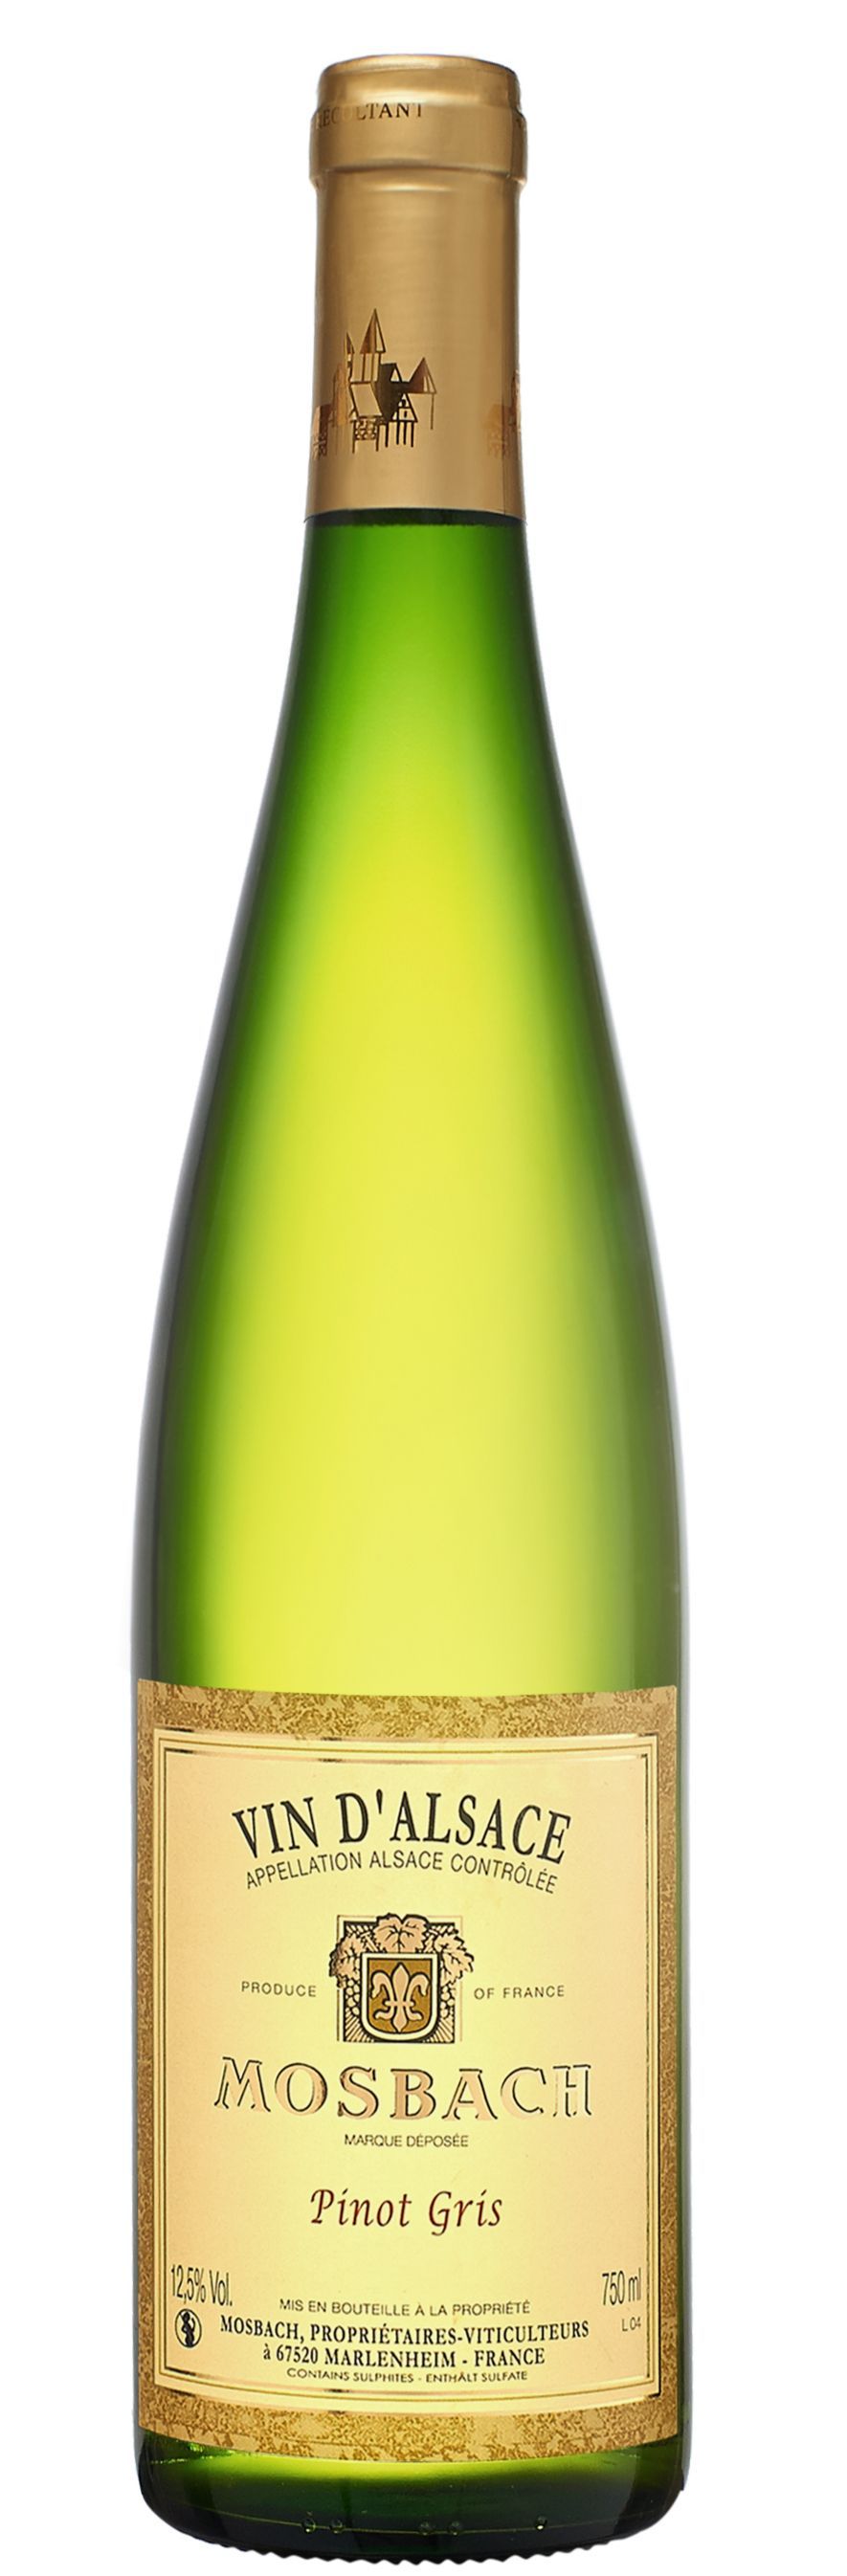 GFA MOSBACH (MARLENHEIM) Pinot Gris Mosbach, White, 2020, Alsace ou Vin d'Alsace. Bottle image